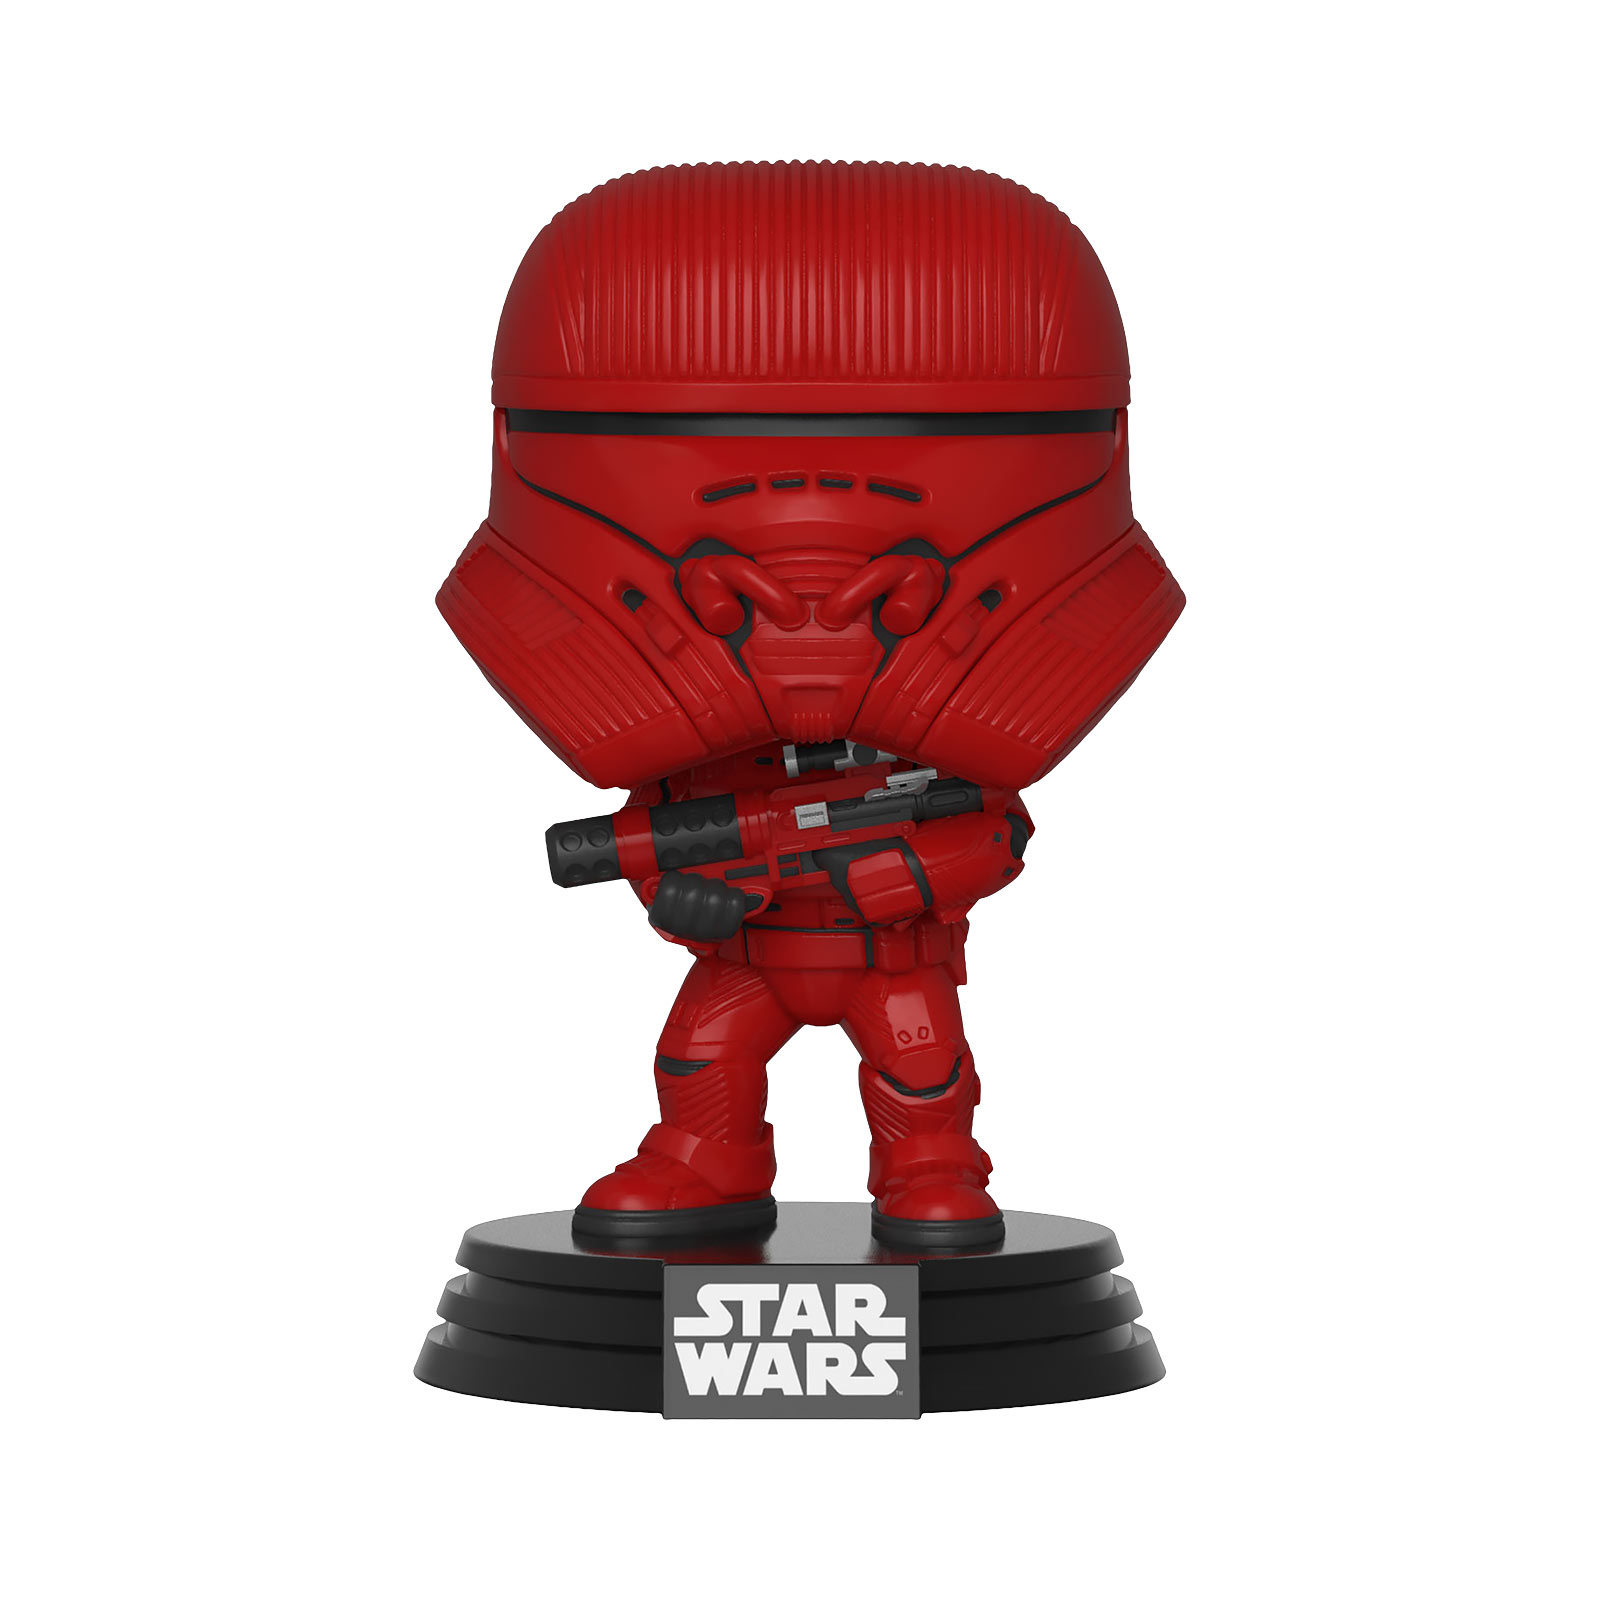 Star Wars - Sith Jet Trooper Funko Pop bobblehead figure